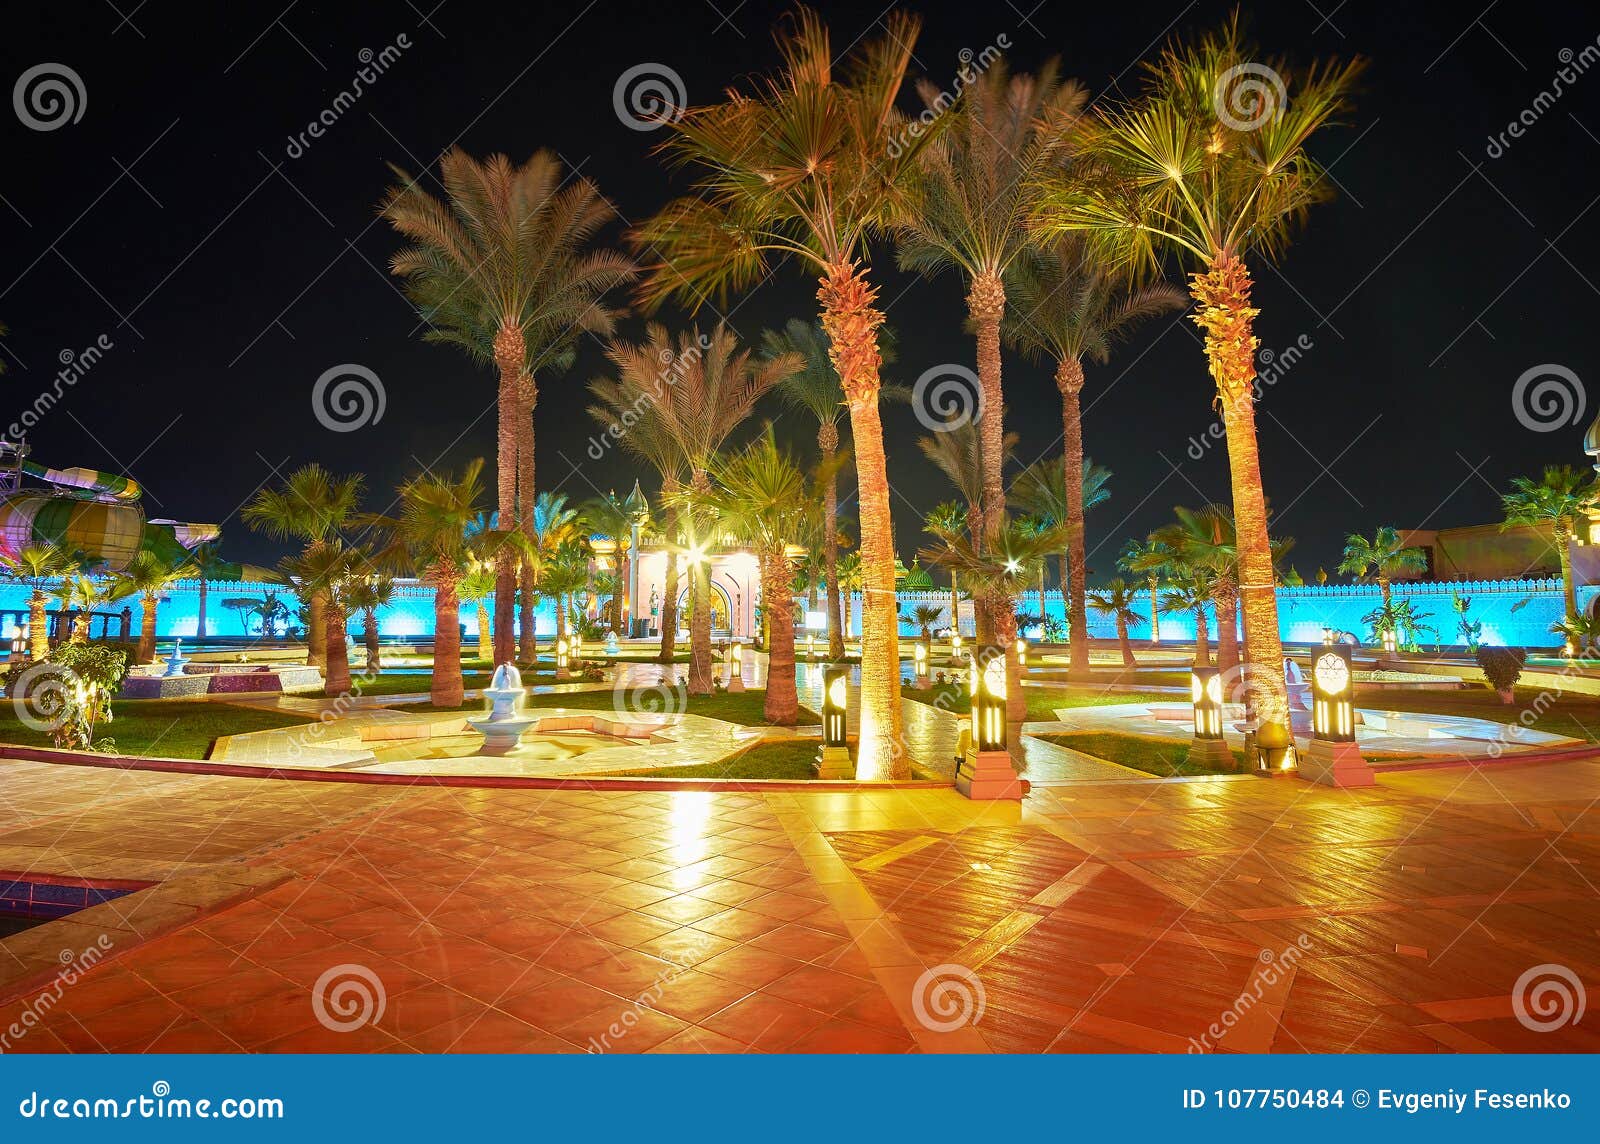 the evening garden of fantasia palace, sharm el sheikh, egypt